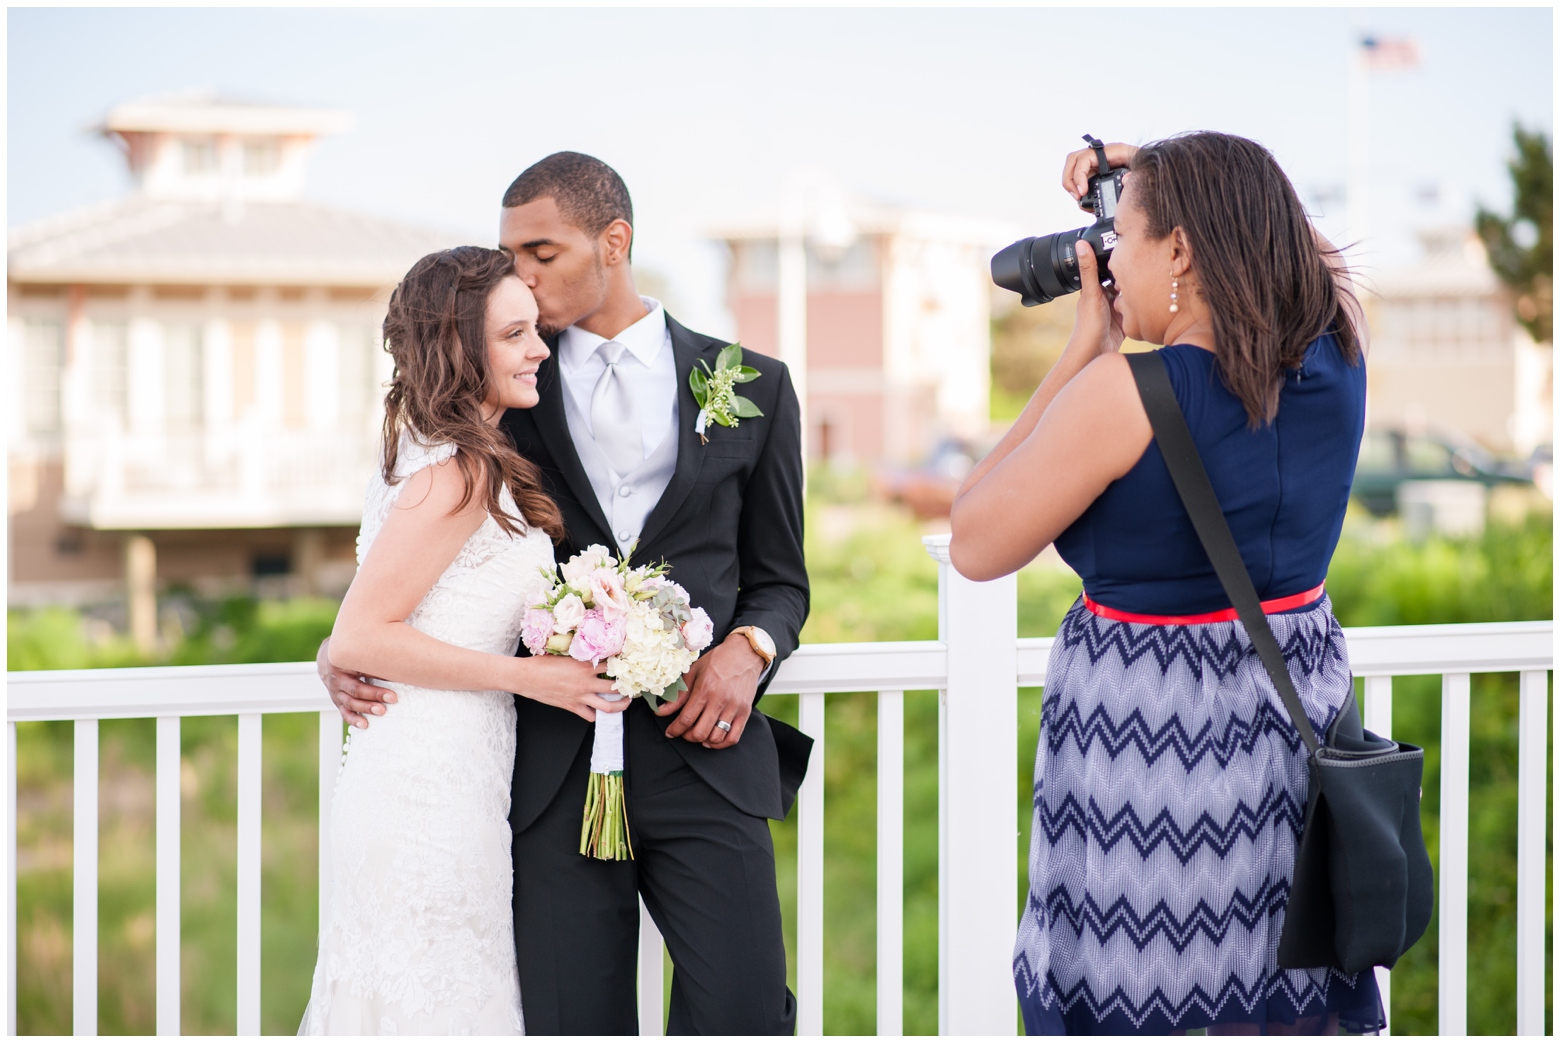 Angie McPherson Photography Behind The Scenes Photos Hampton Roads Wedding 2015_0005